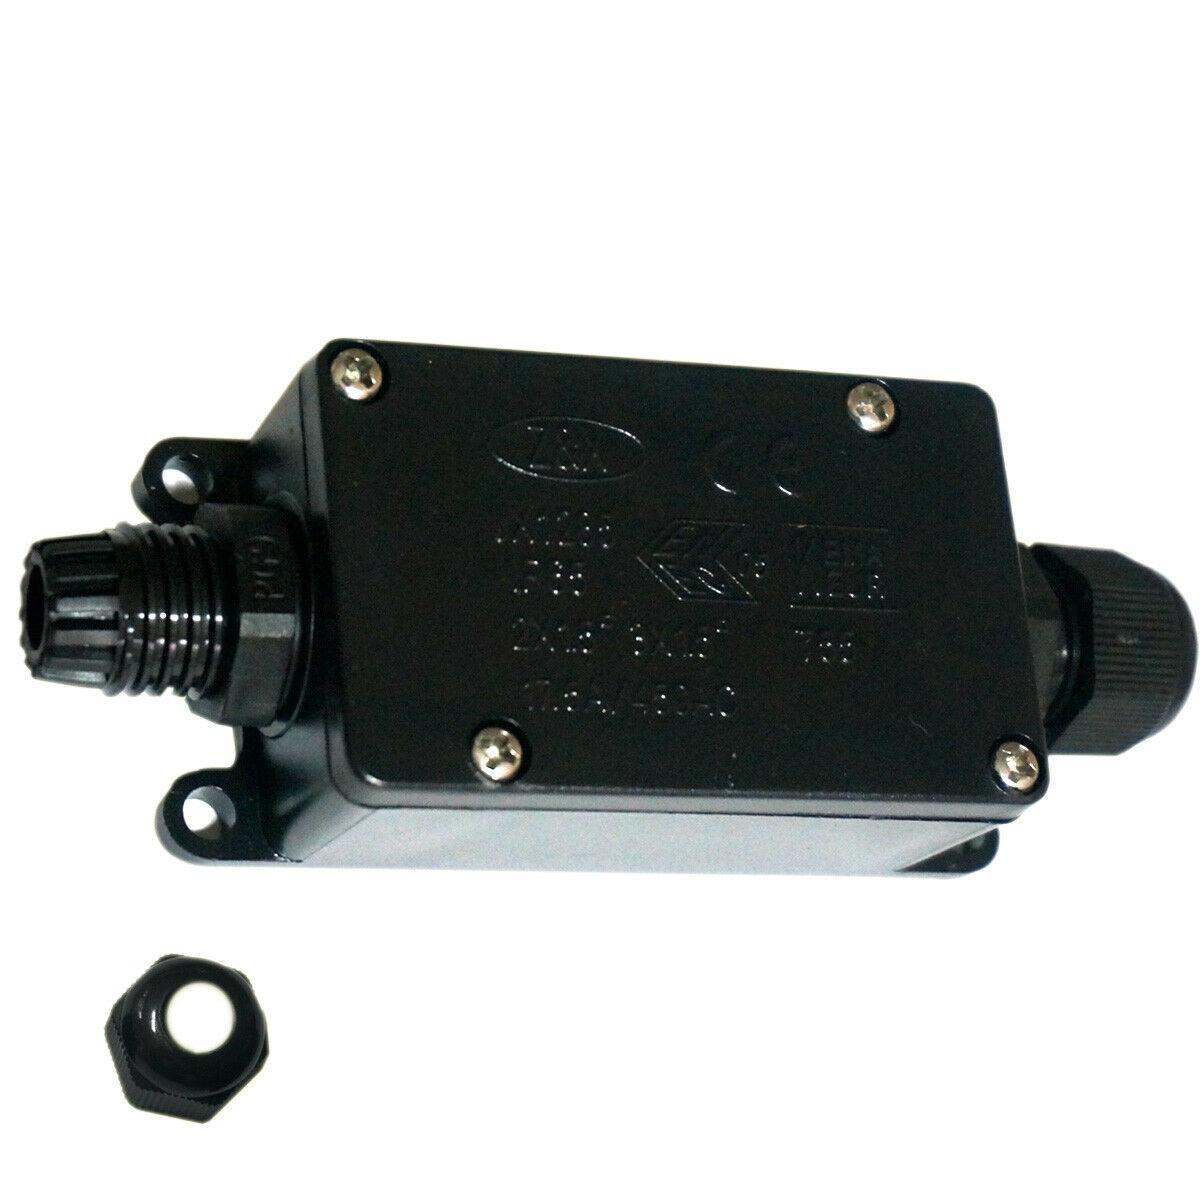 2/3 Way IP65 Junction Box Waterproof Electrical Connector